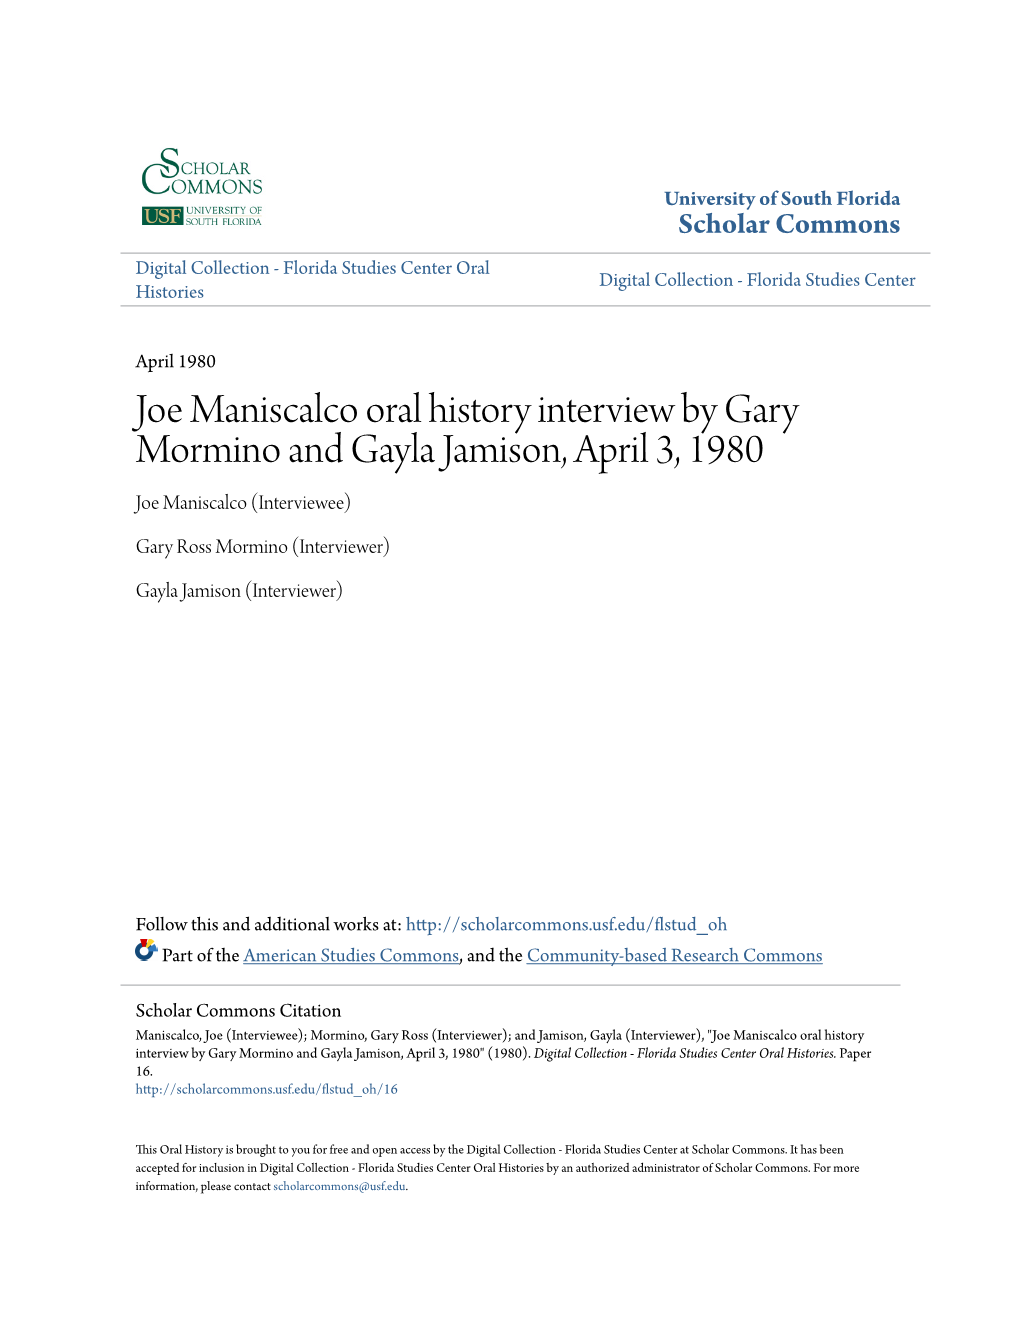 Joe Maniscalco Oral History Interview by Gary Mormino and Gayla Jamison, April 3, 1980 Joe Maniscalco (Interviewee)